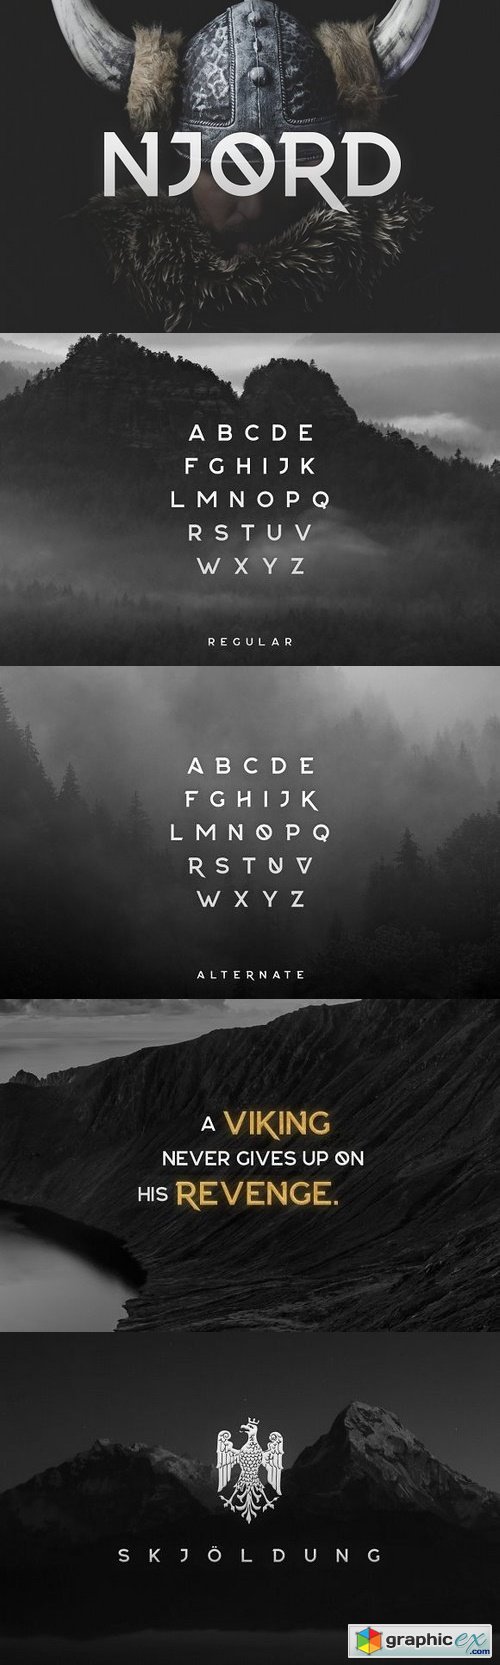 Njord Typeface